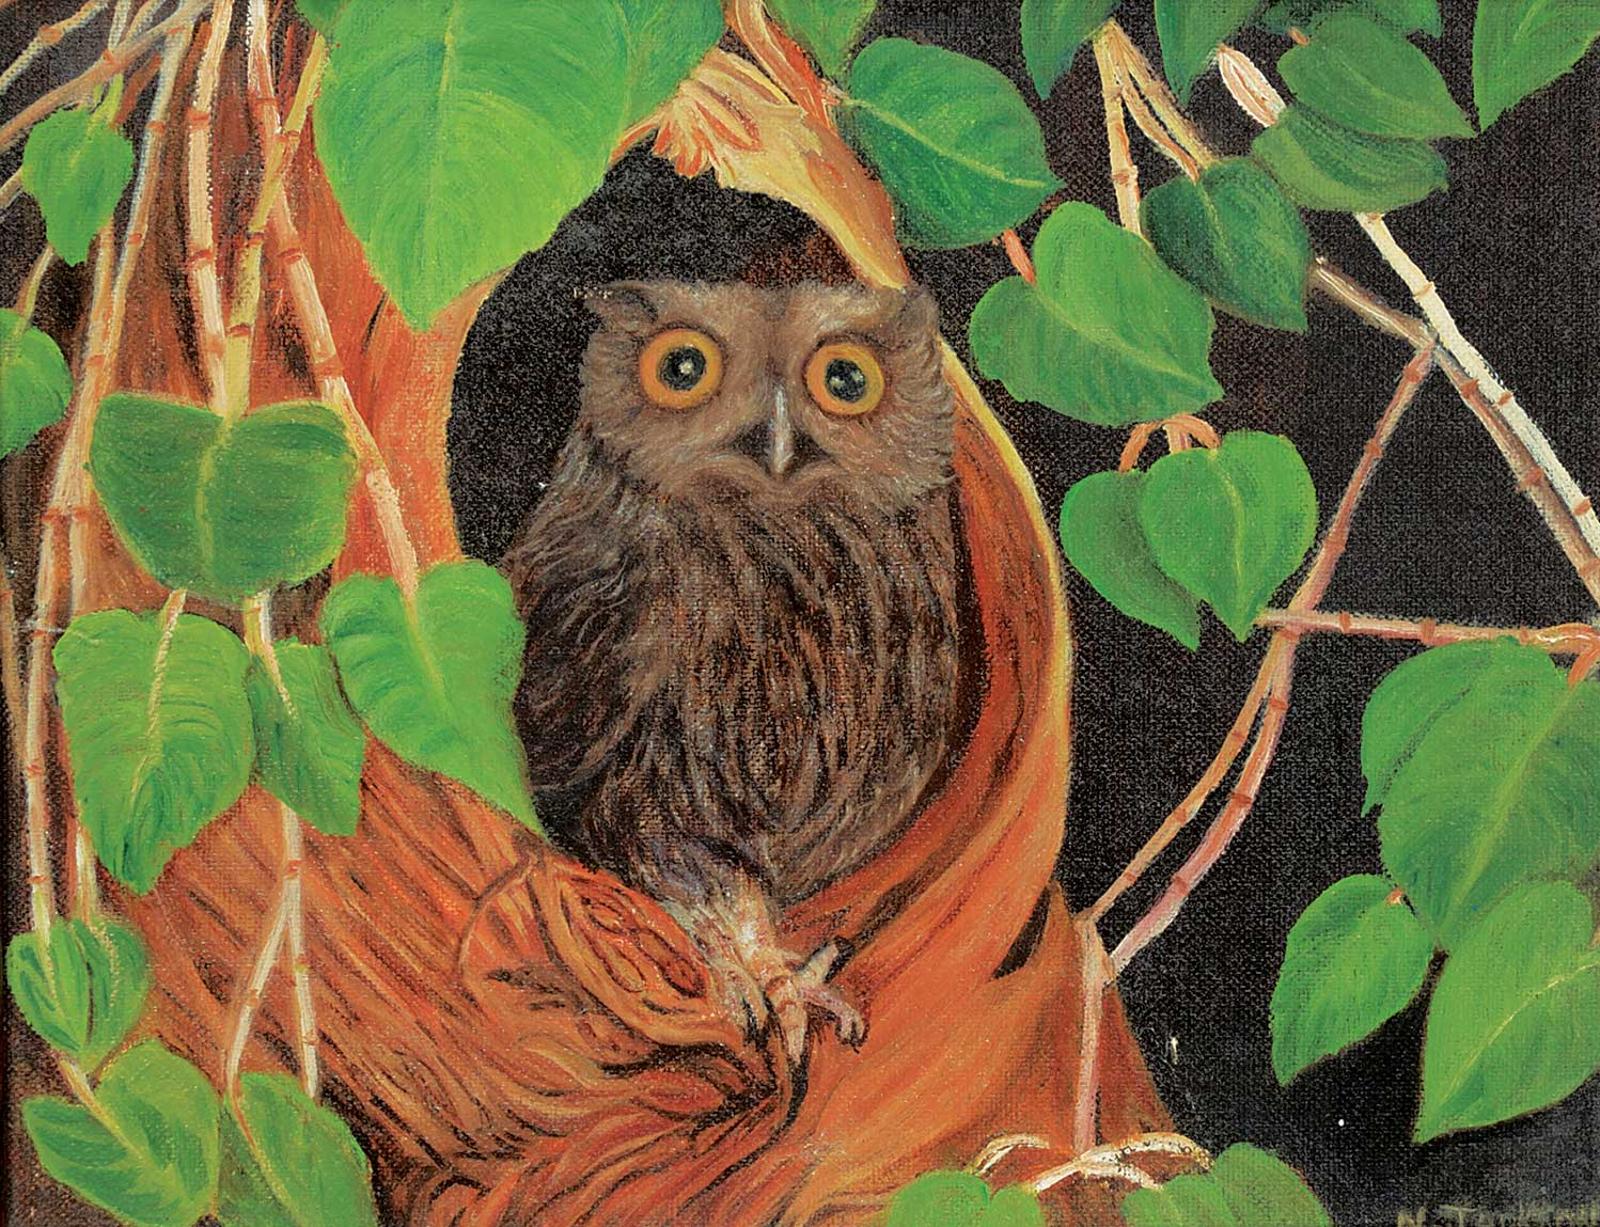 N. Jackson - Untitled - The Owl